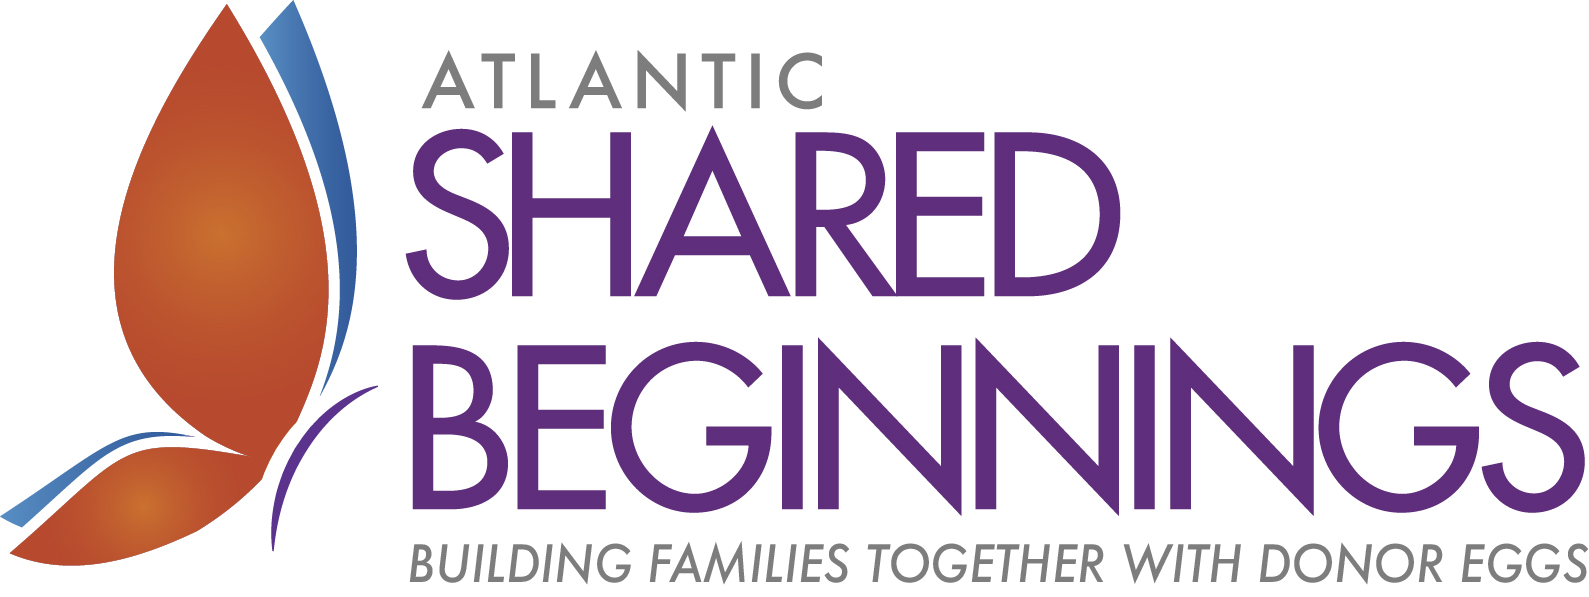 Atlantic Shared Beginnings Logo